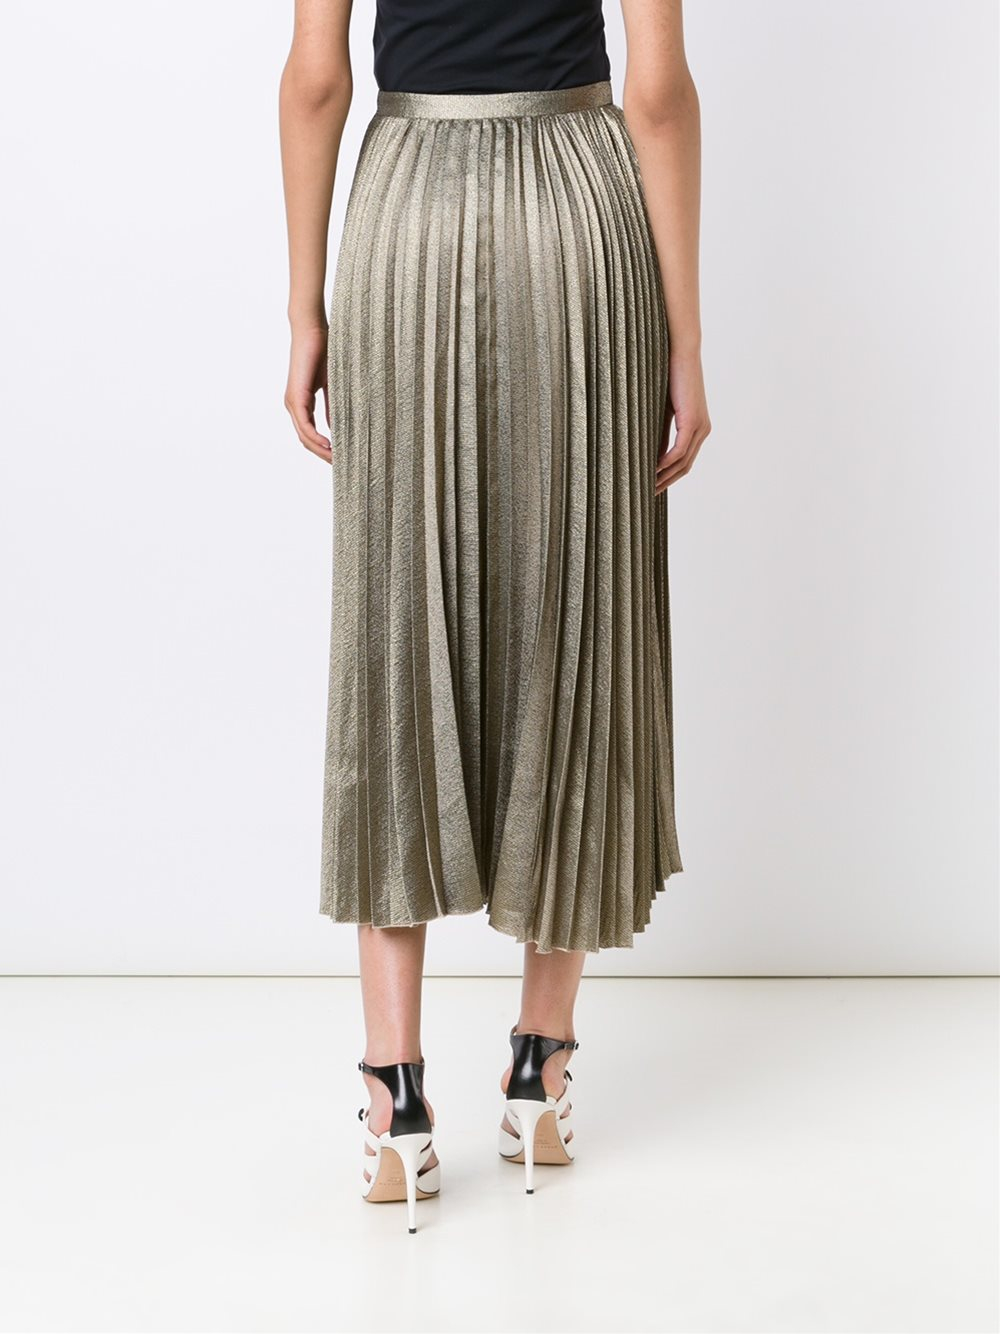 Lyst - Derek Lam Long Pleated Skirt in Metallic